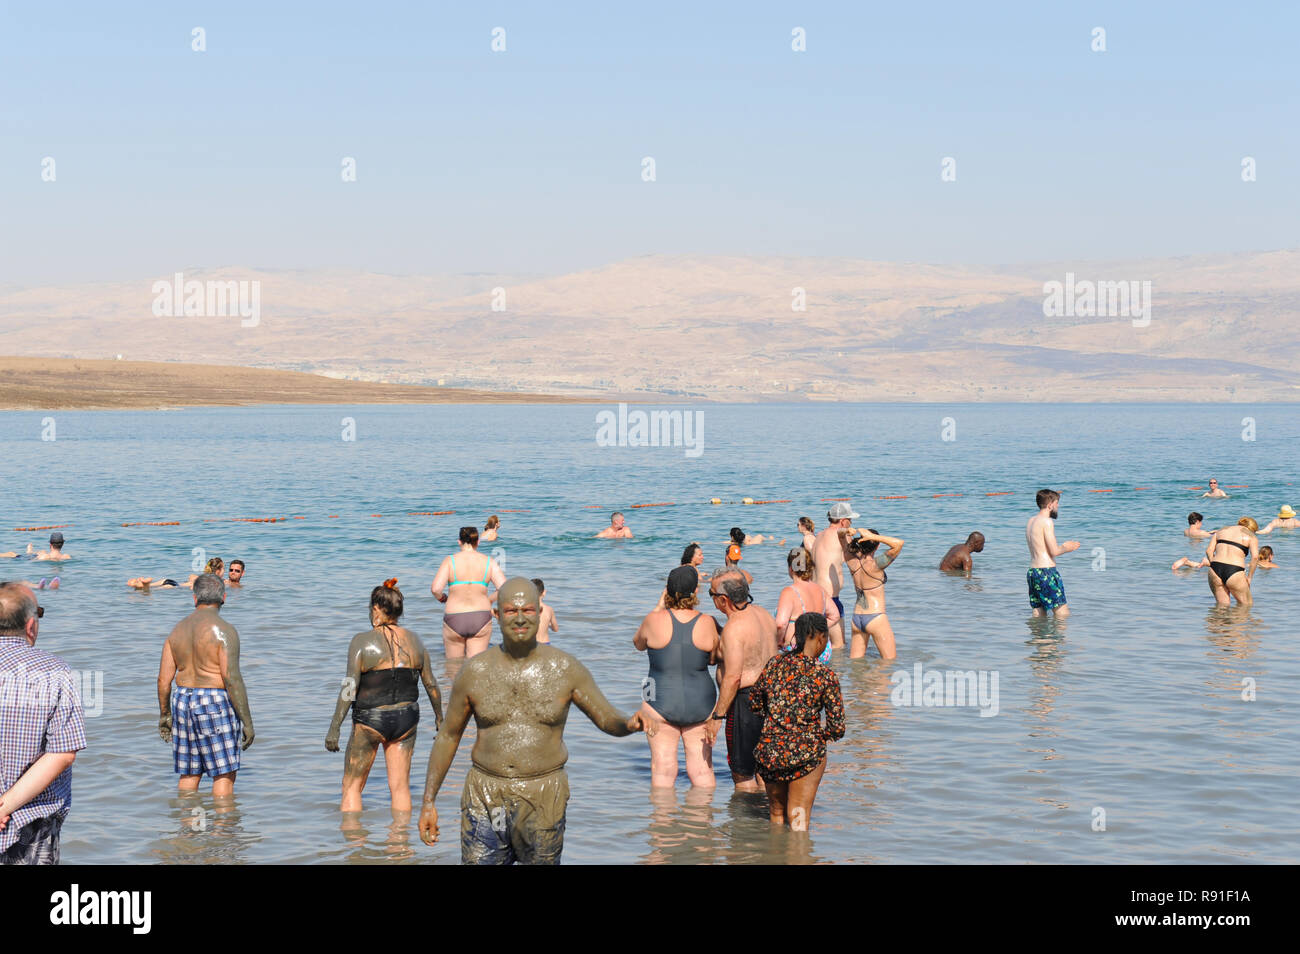 Israel's Kalya Beach Resort of world's saltiest highly mineralised Dead Sea in Jordan Rift Valley where people bathe in salty mud for health benefits. Stock Photo